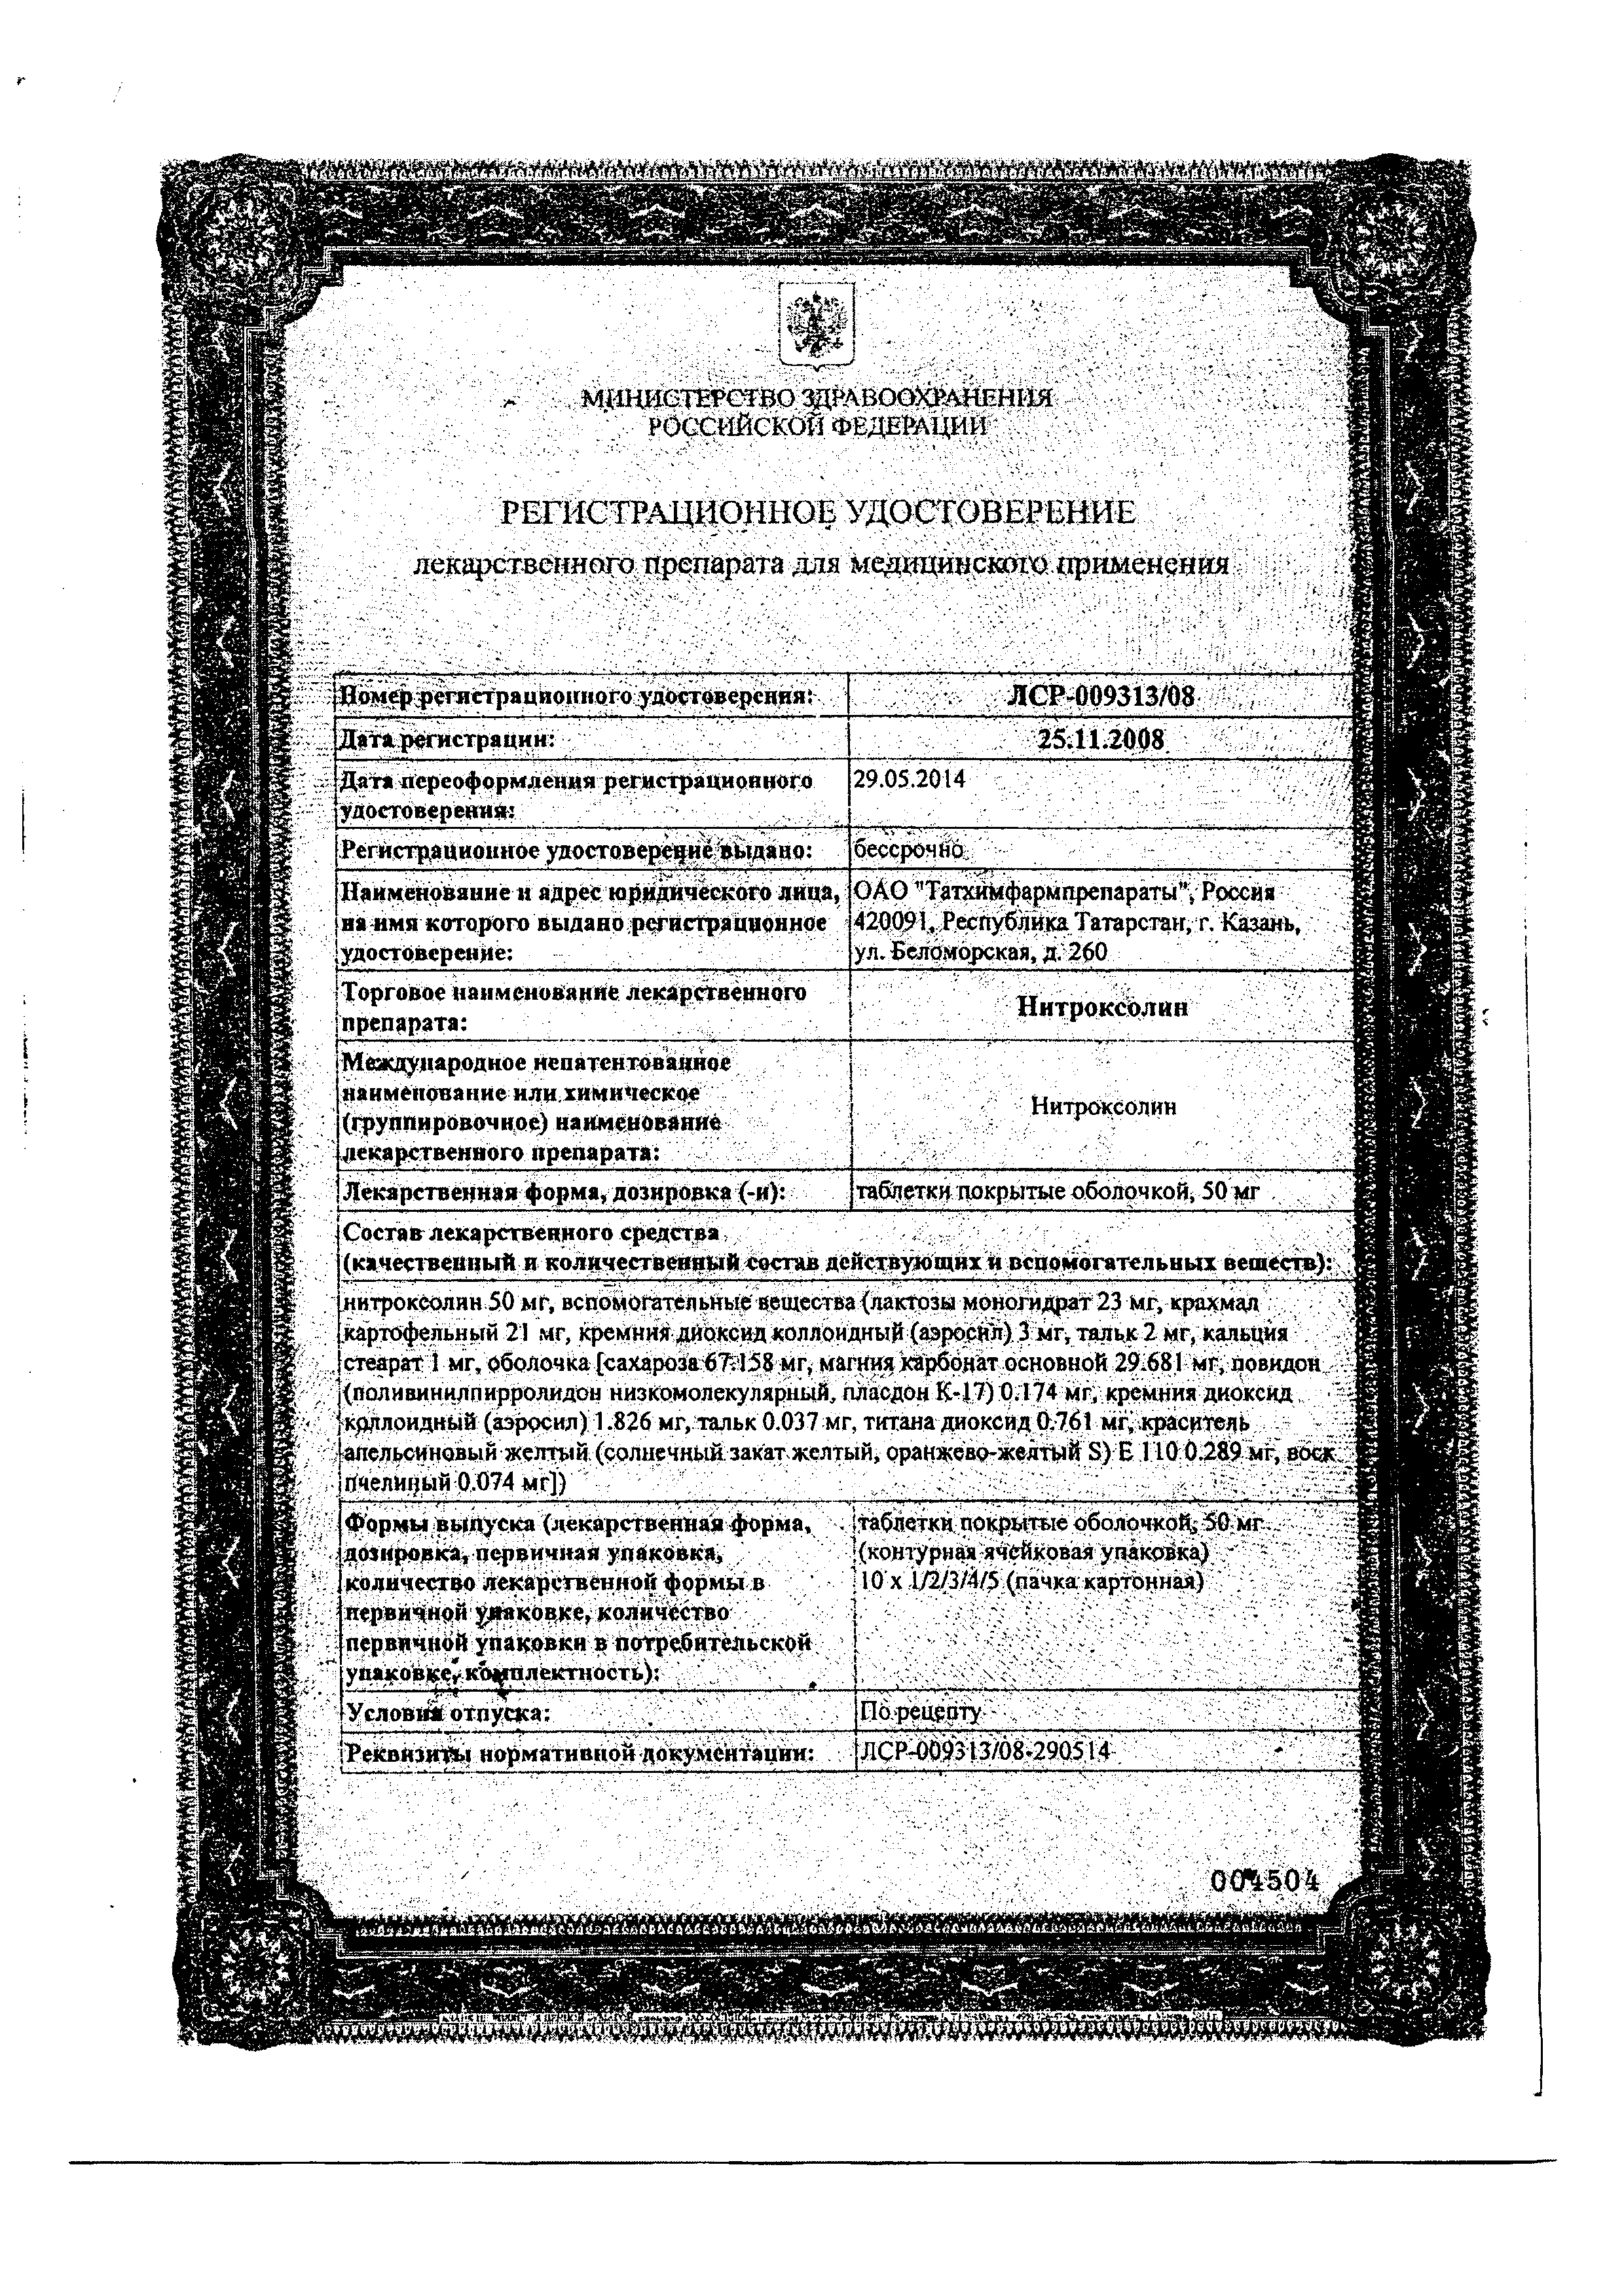 Нитроксолин сертификат